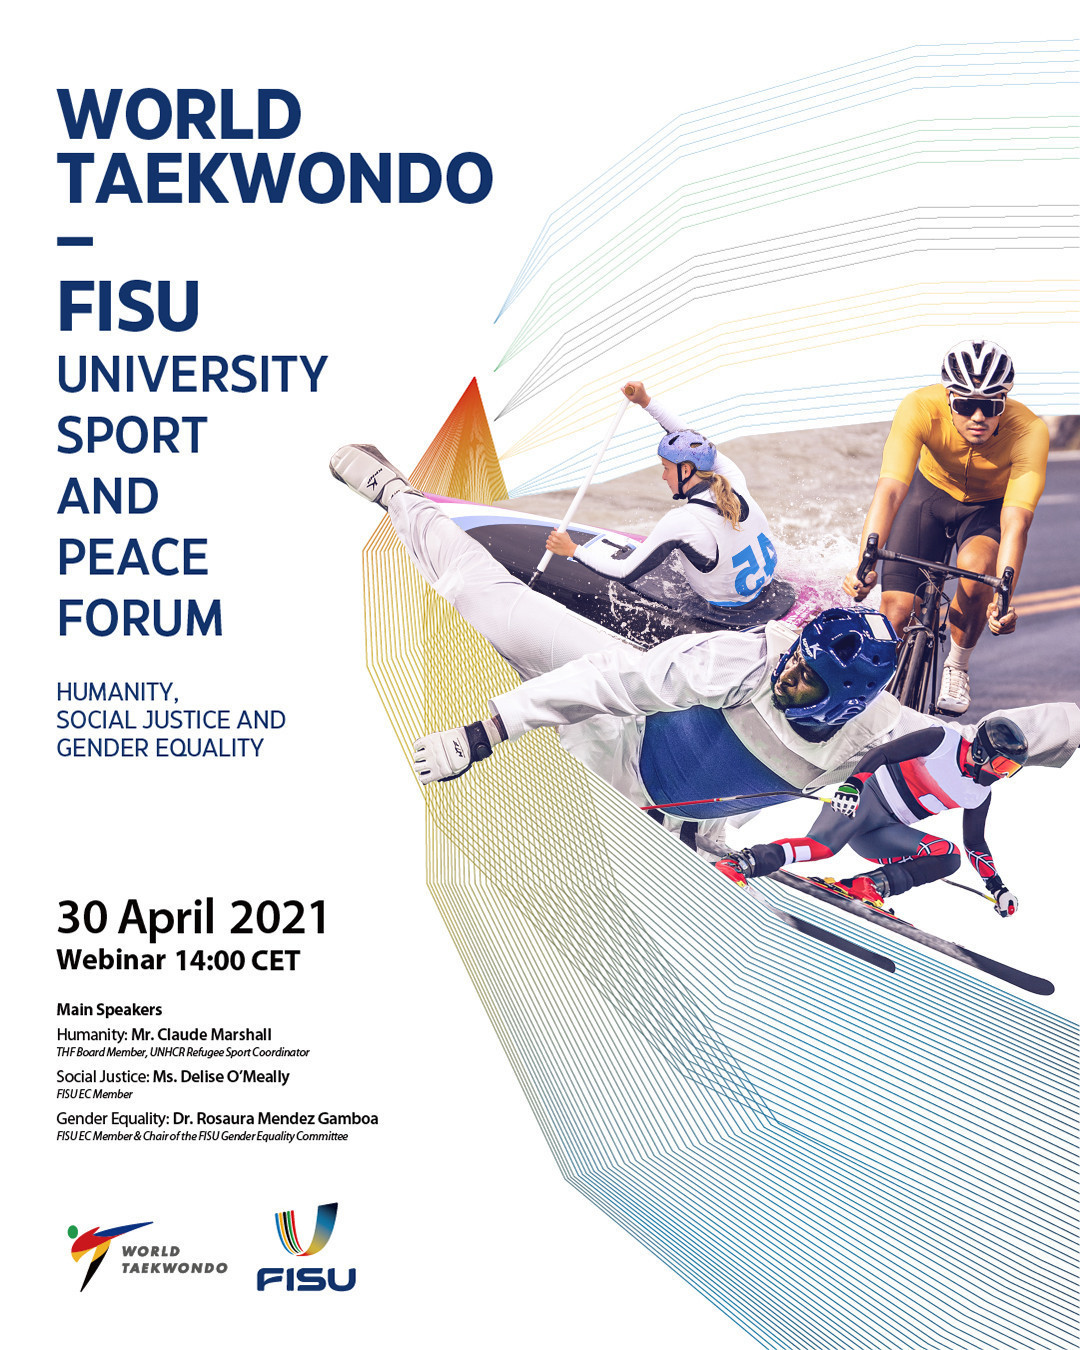 First World Taekwondo-FISU University Sport and Peace Forum hears THF Board member's plea